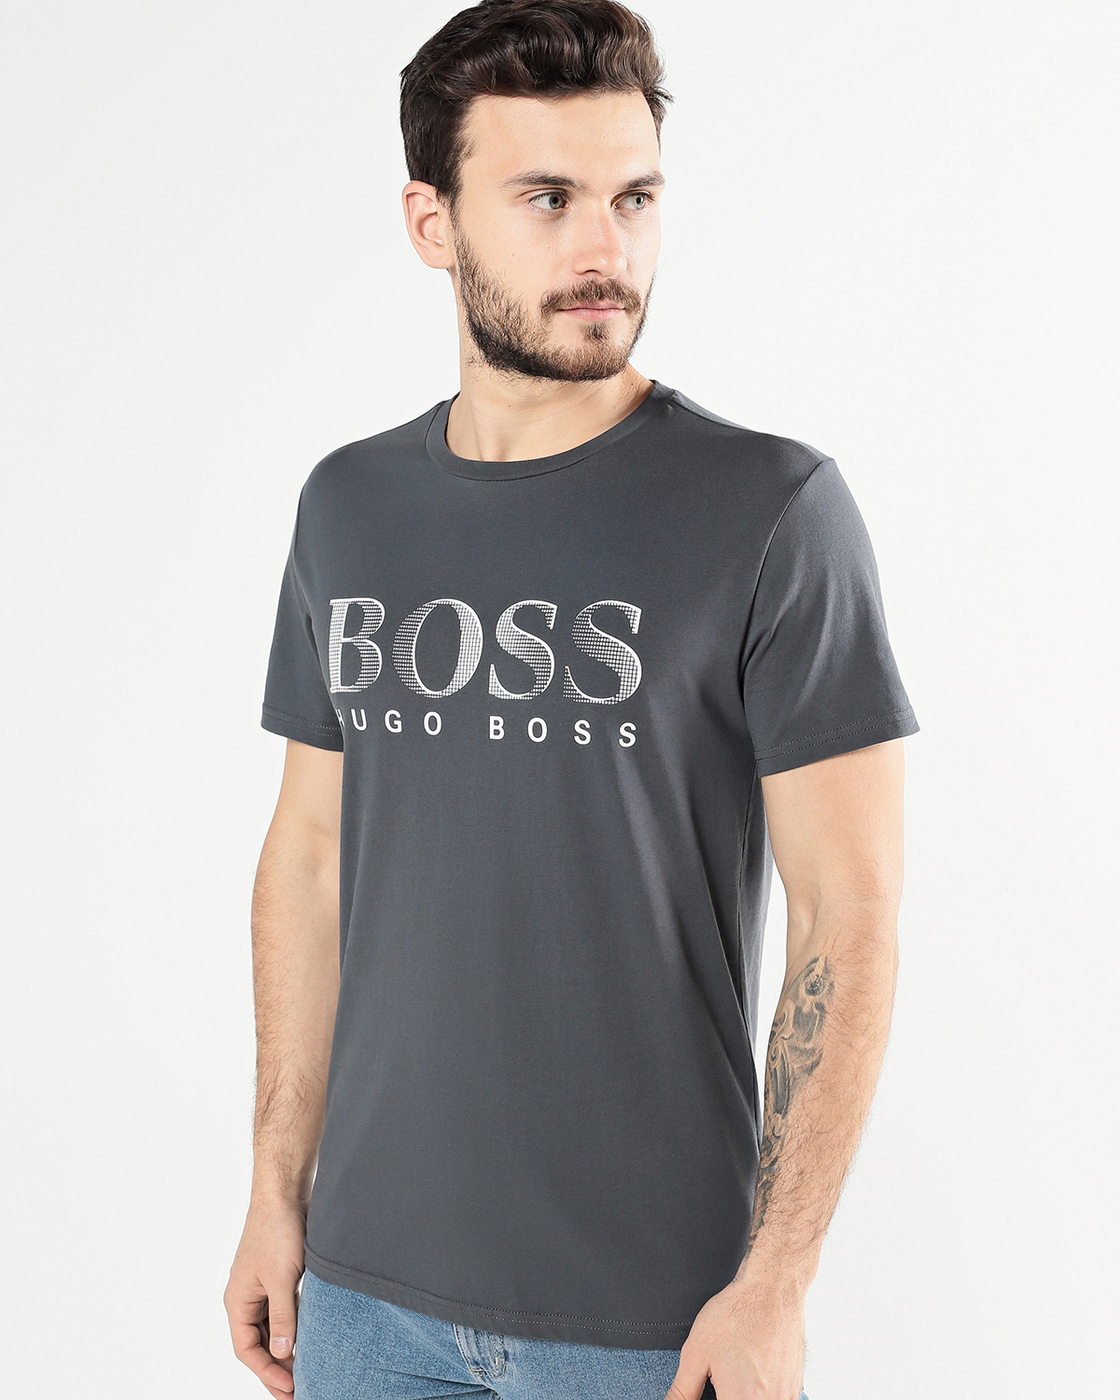 Футболки хуго босс. Футболка Boss Hugo Boss. Boss jugo Boss футболки. Футболка Хуго босс мужские. Футболка Hugo Boss 50488330.